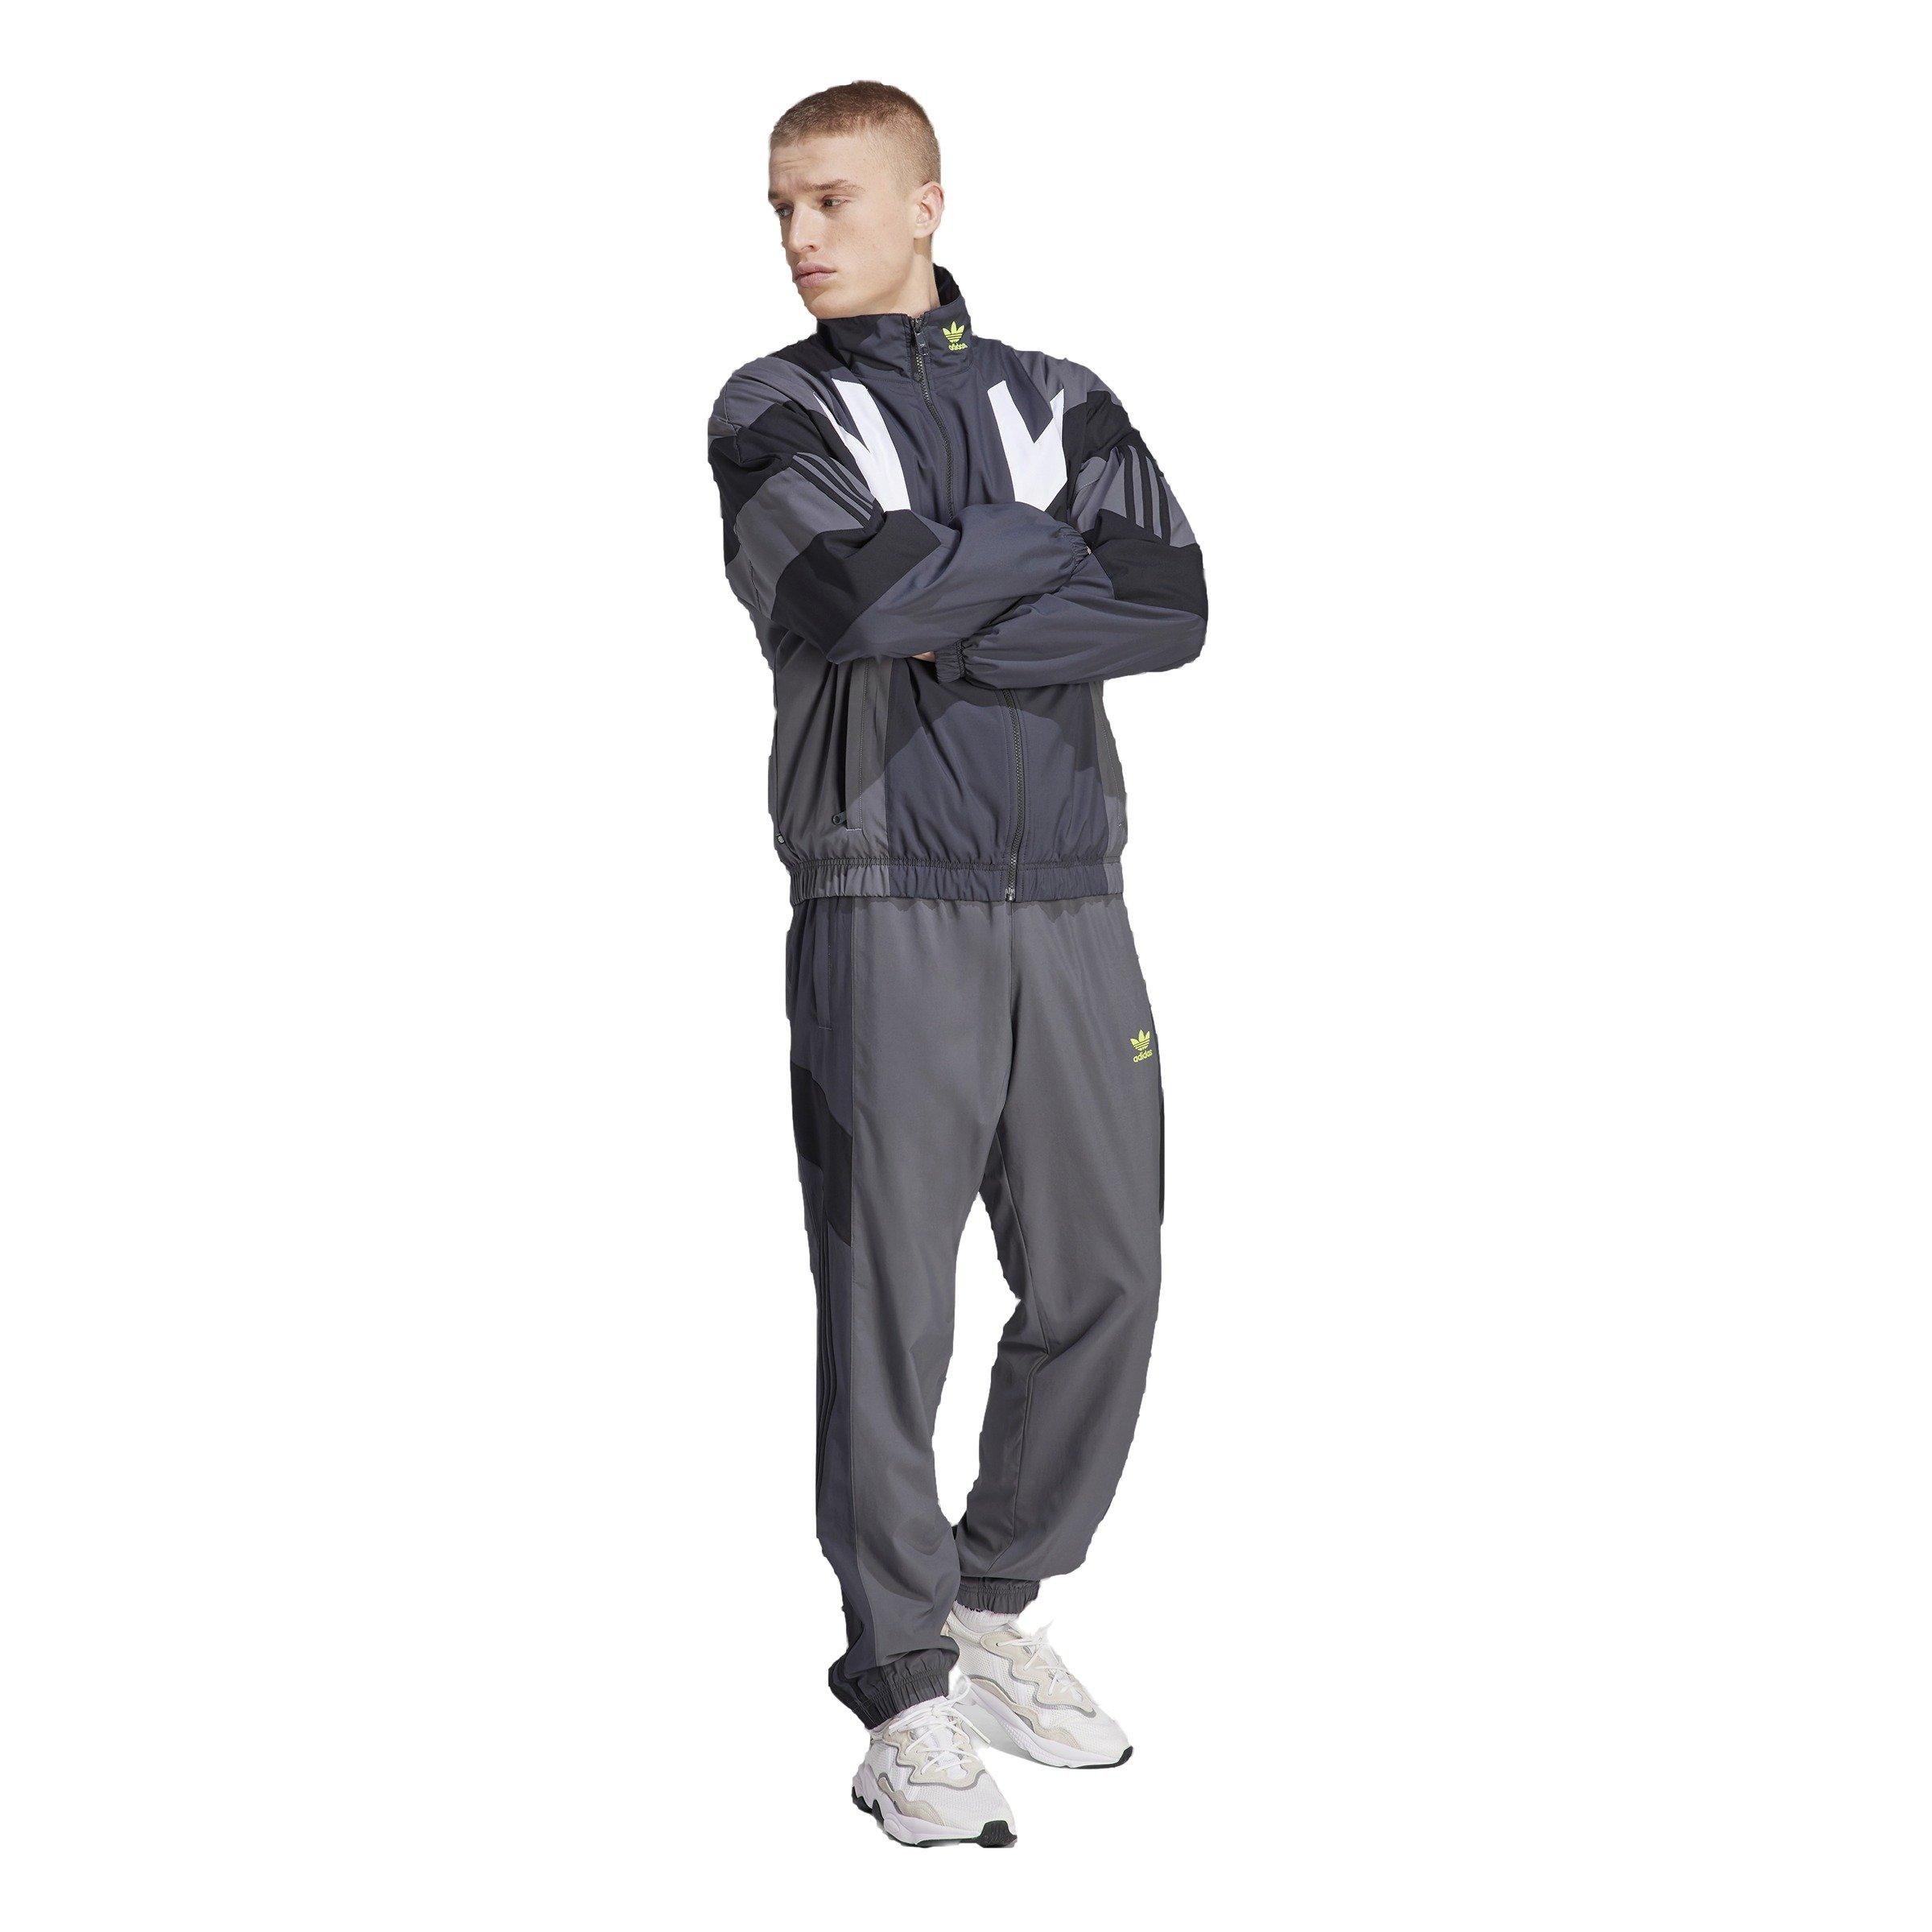 Originals - City adidas Track - Rekive Hibbett | Woven Men\'s Gear Jacket Grey